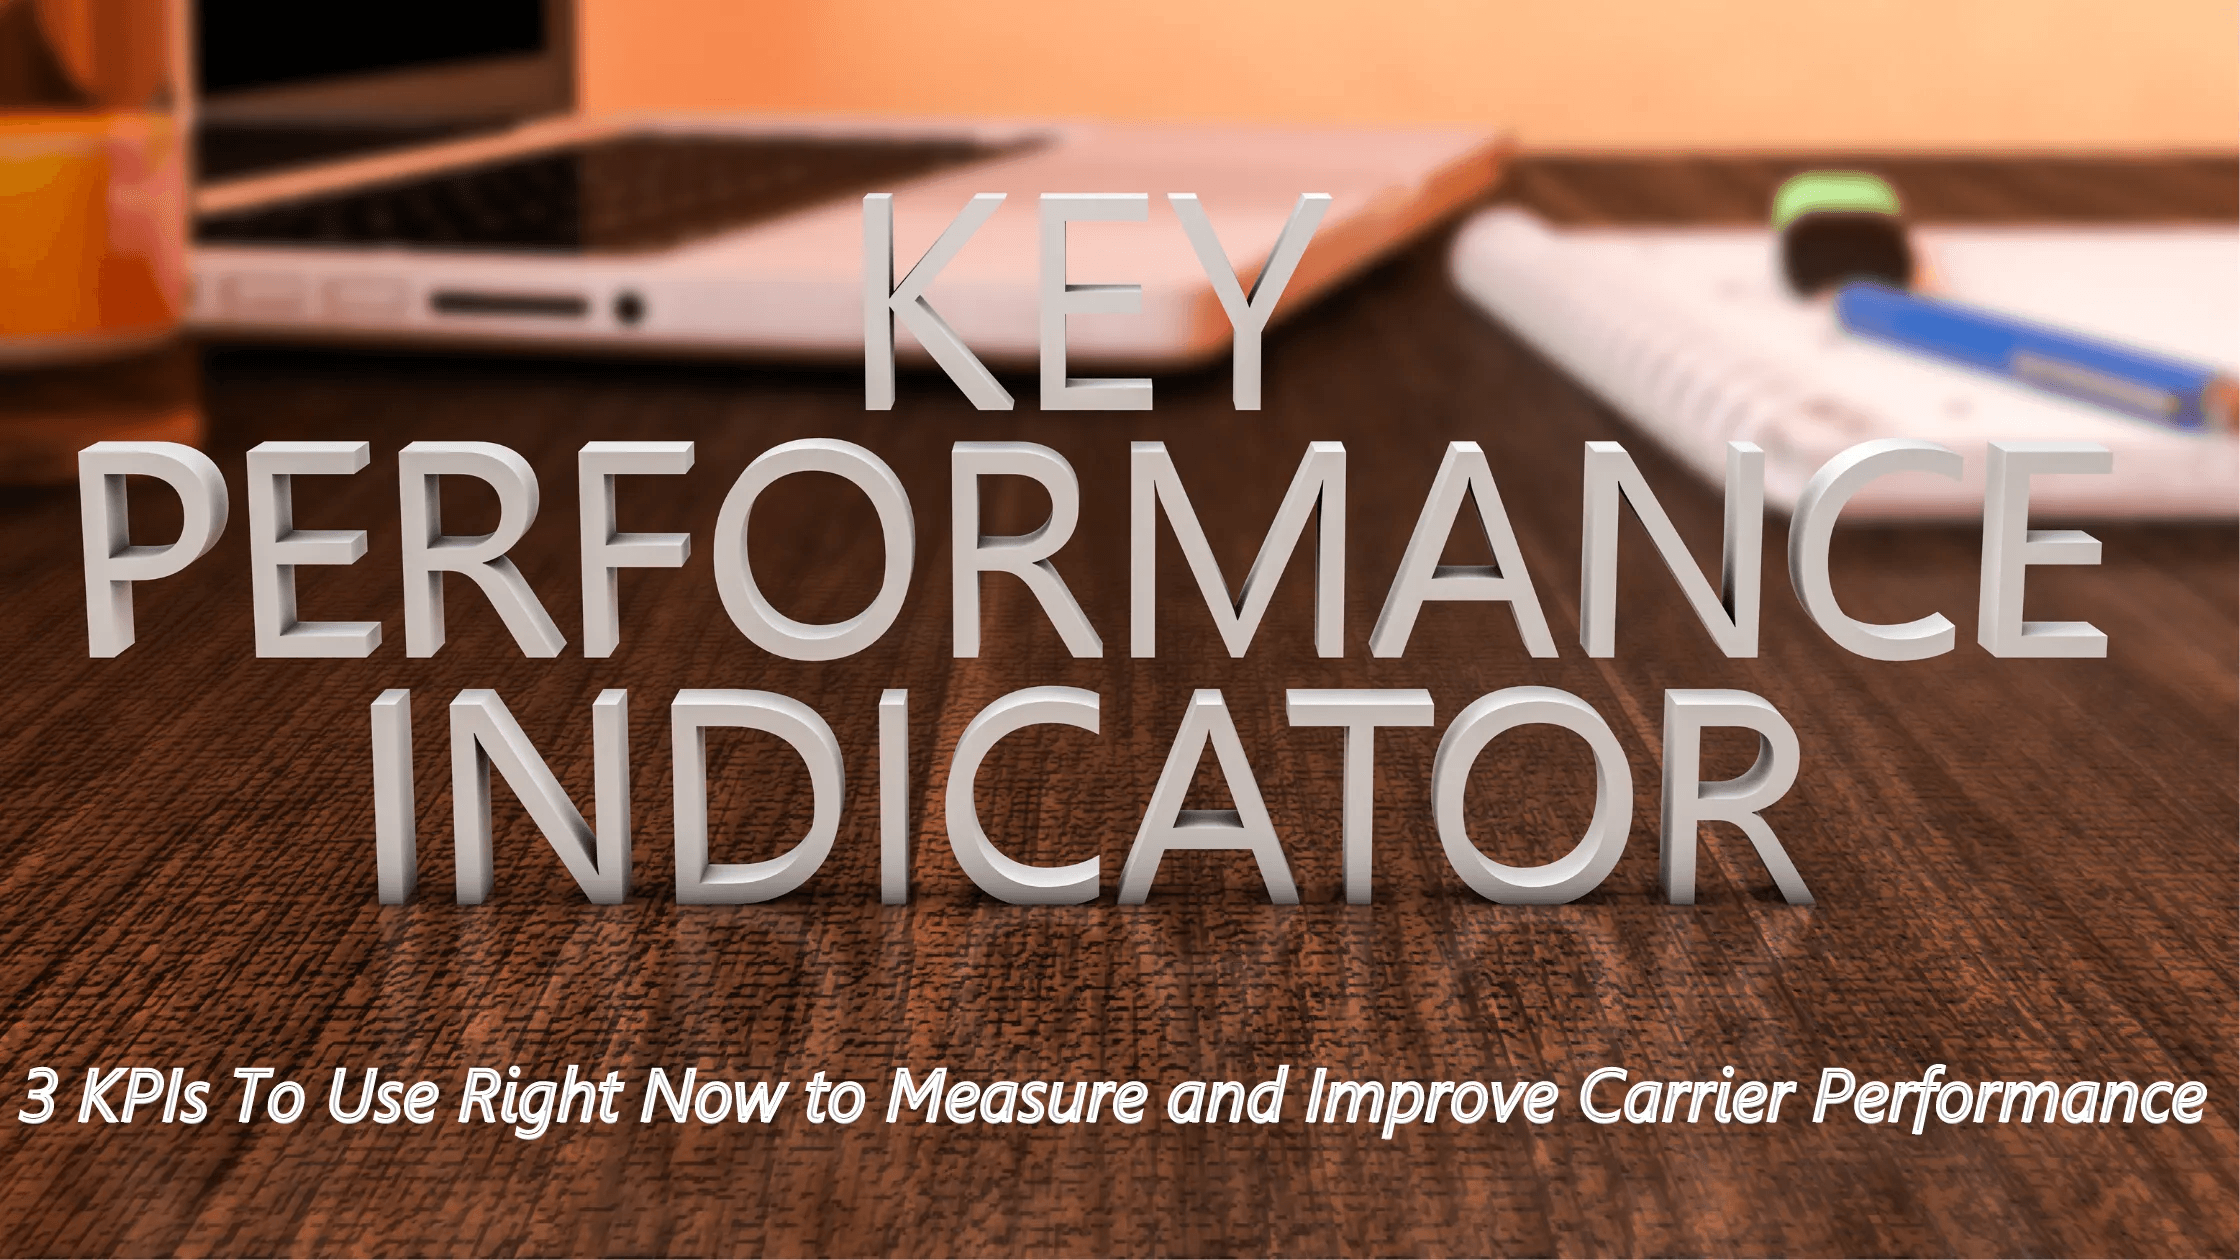 Key performance indicator 3D text on desk